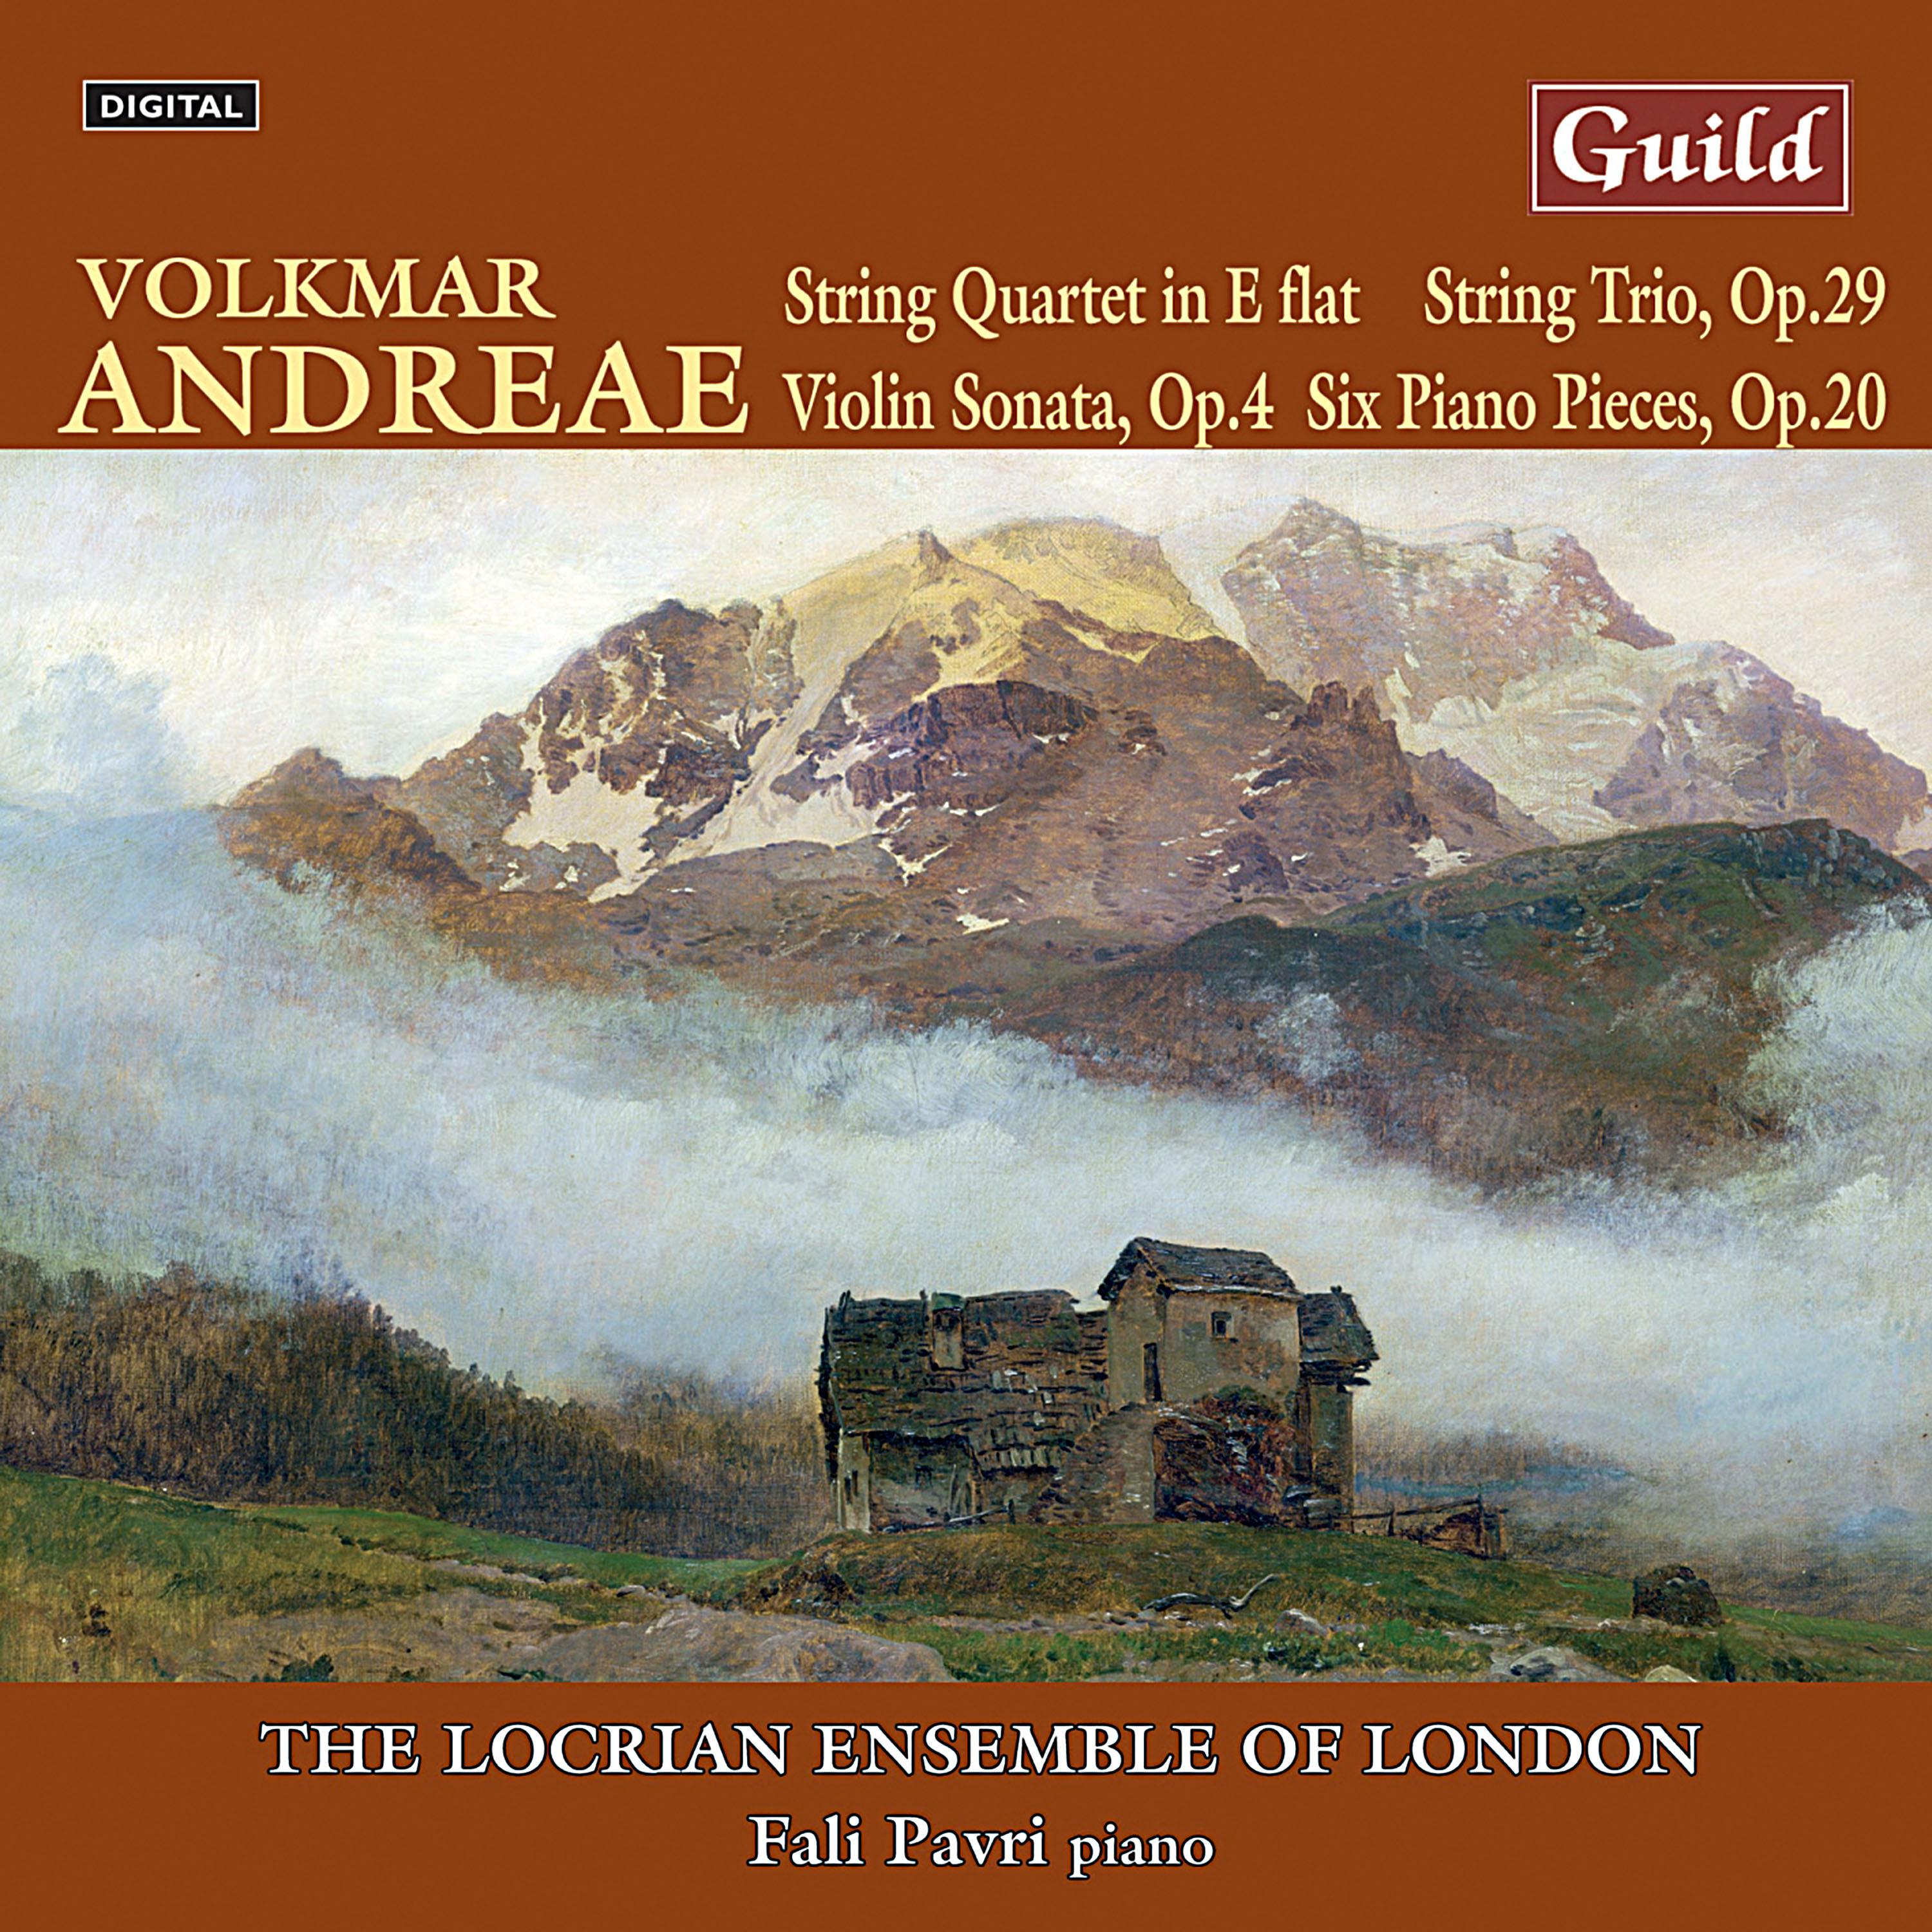 The Locrian Ensemble of London: Rita Manning - String Trio in D minor, Op. 29 (1917) - I. Allegro moderato